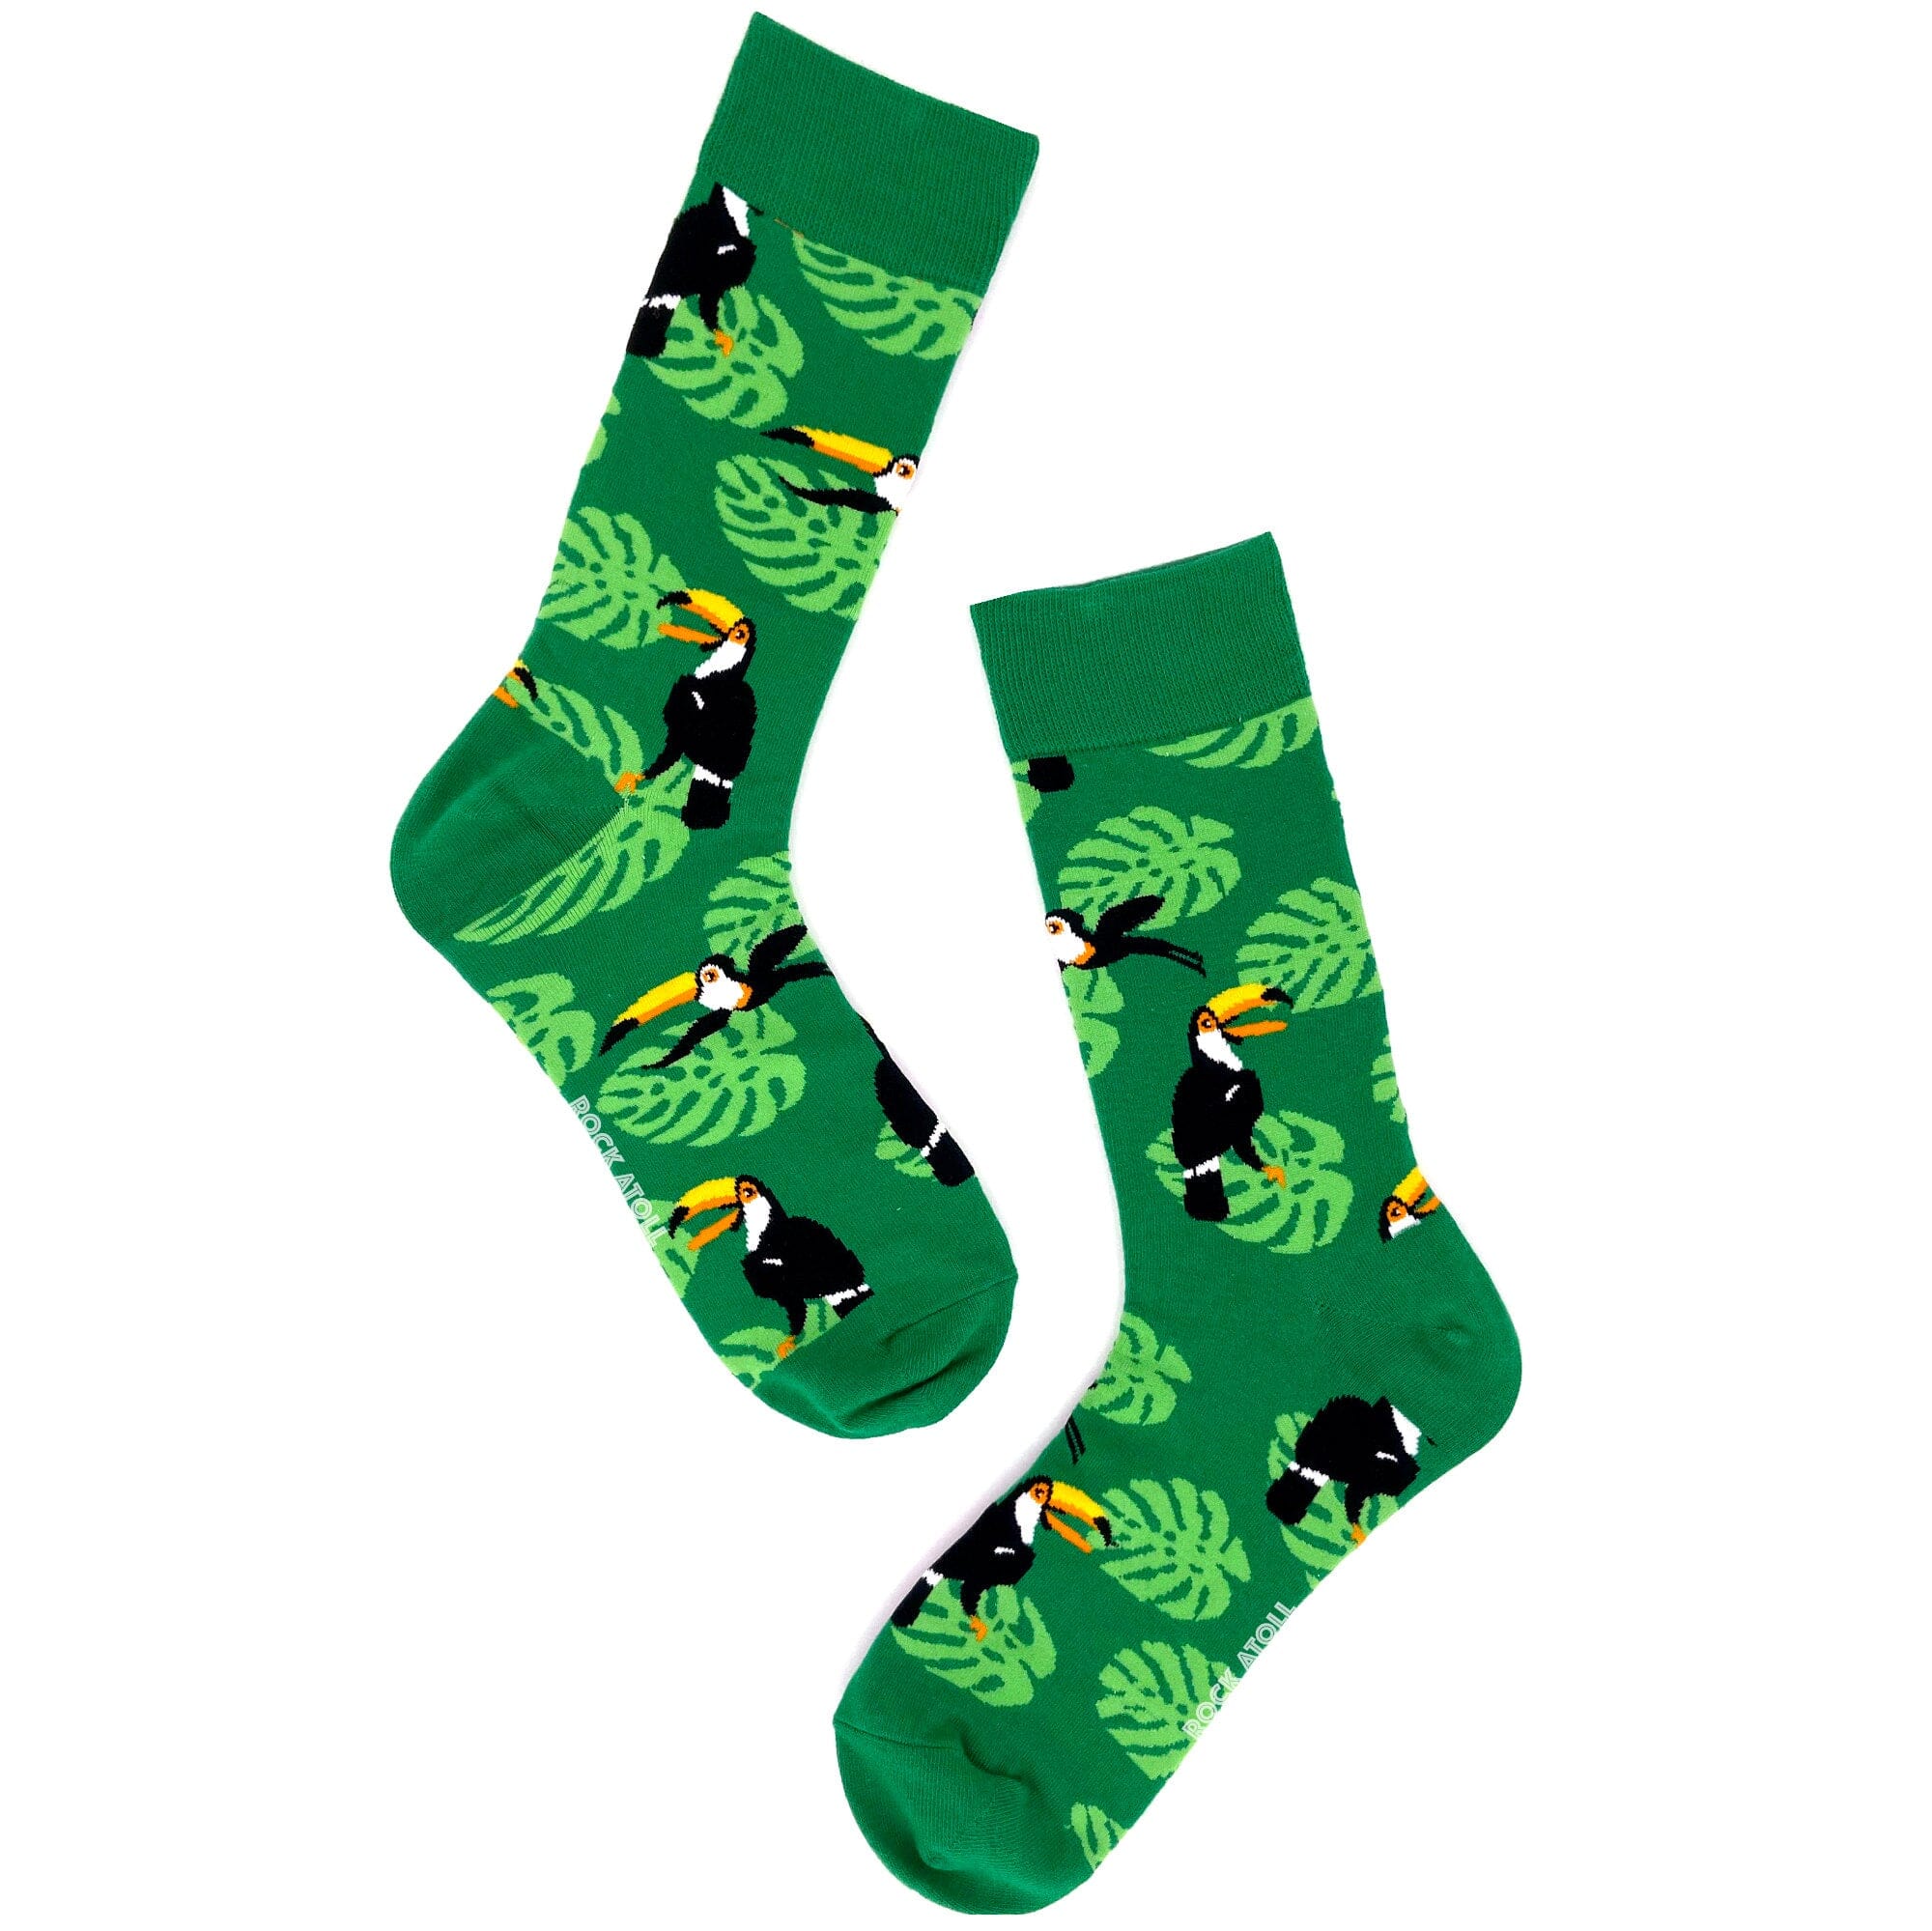 Bright Green Unisex Toucan Tropical Bird Patterned Novelty Crew Socks